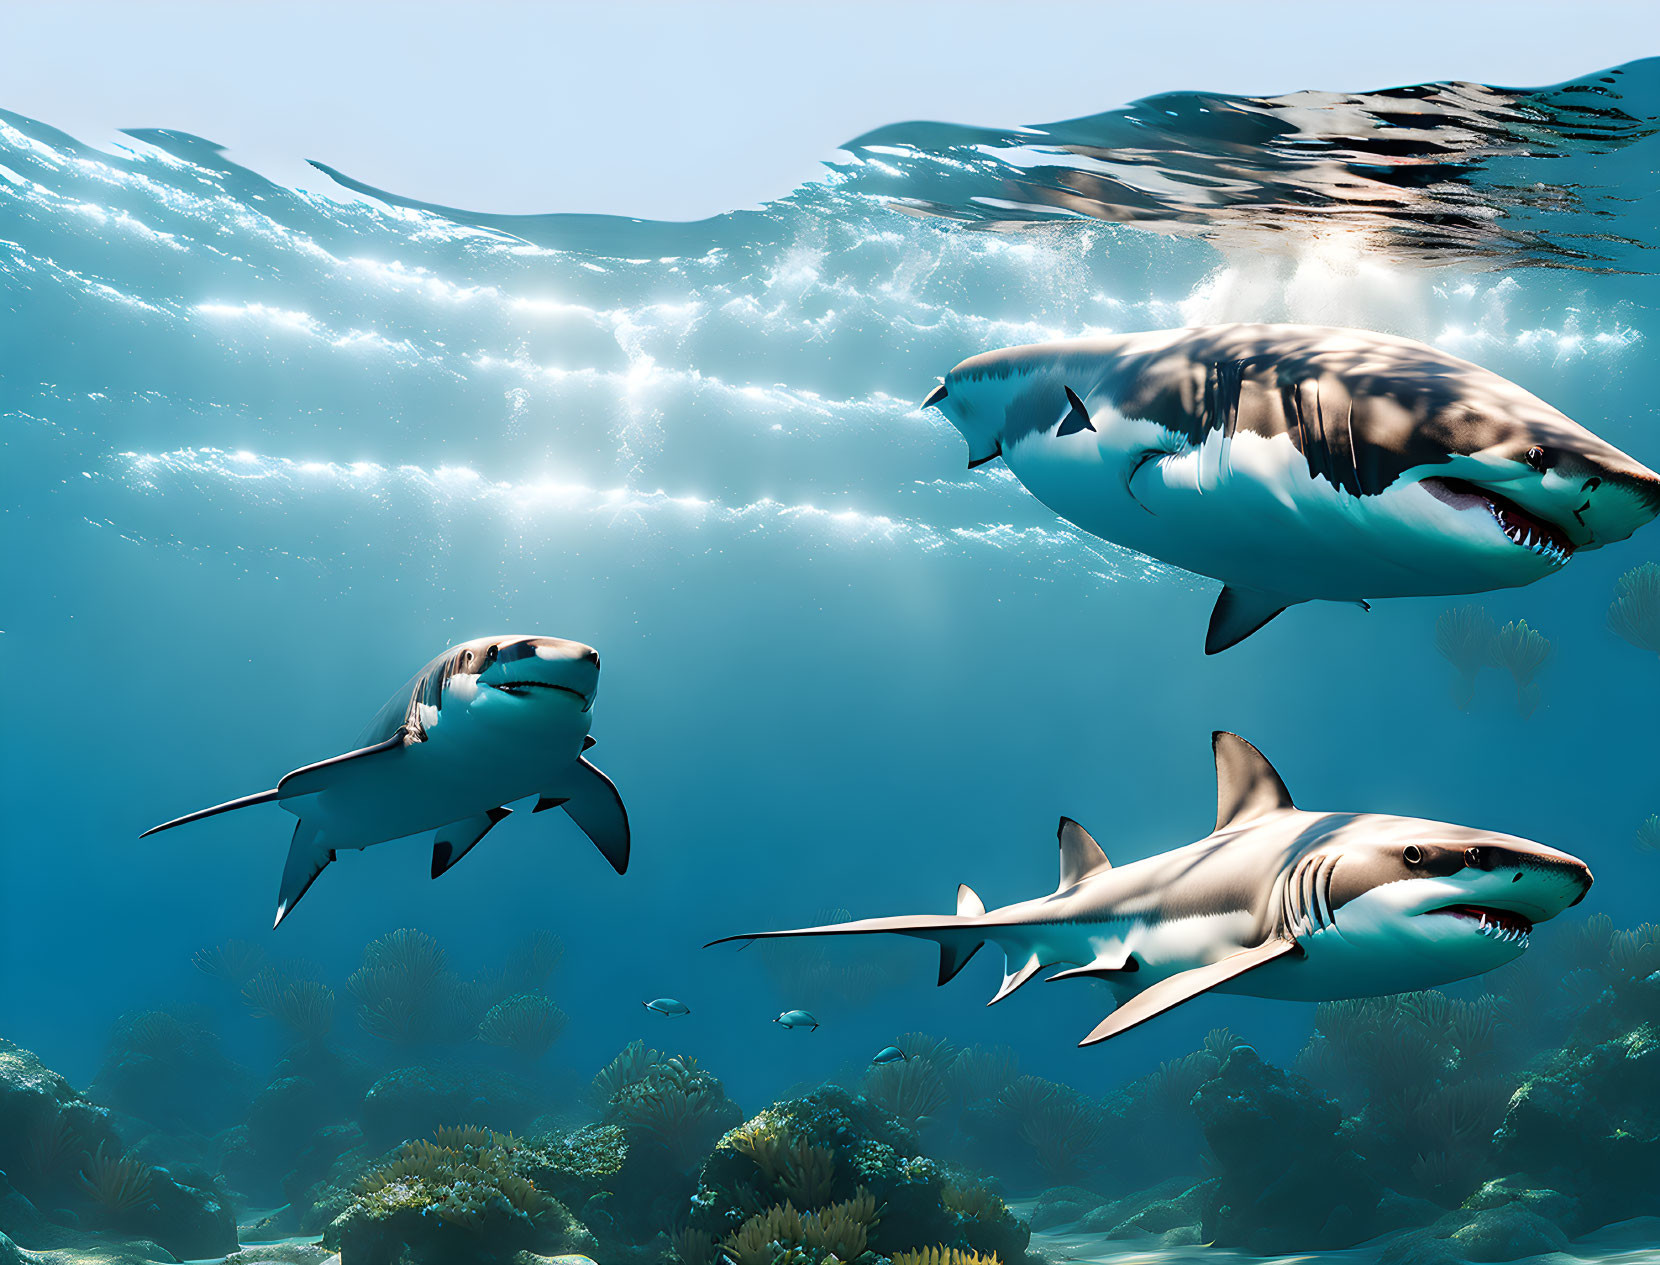 Underwater Scene: Three Sharks, Sunlit Ocean Surface, Coral Reefs